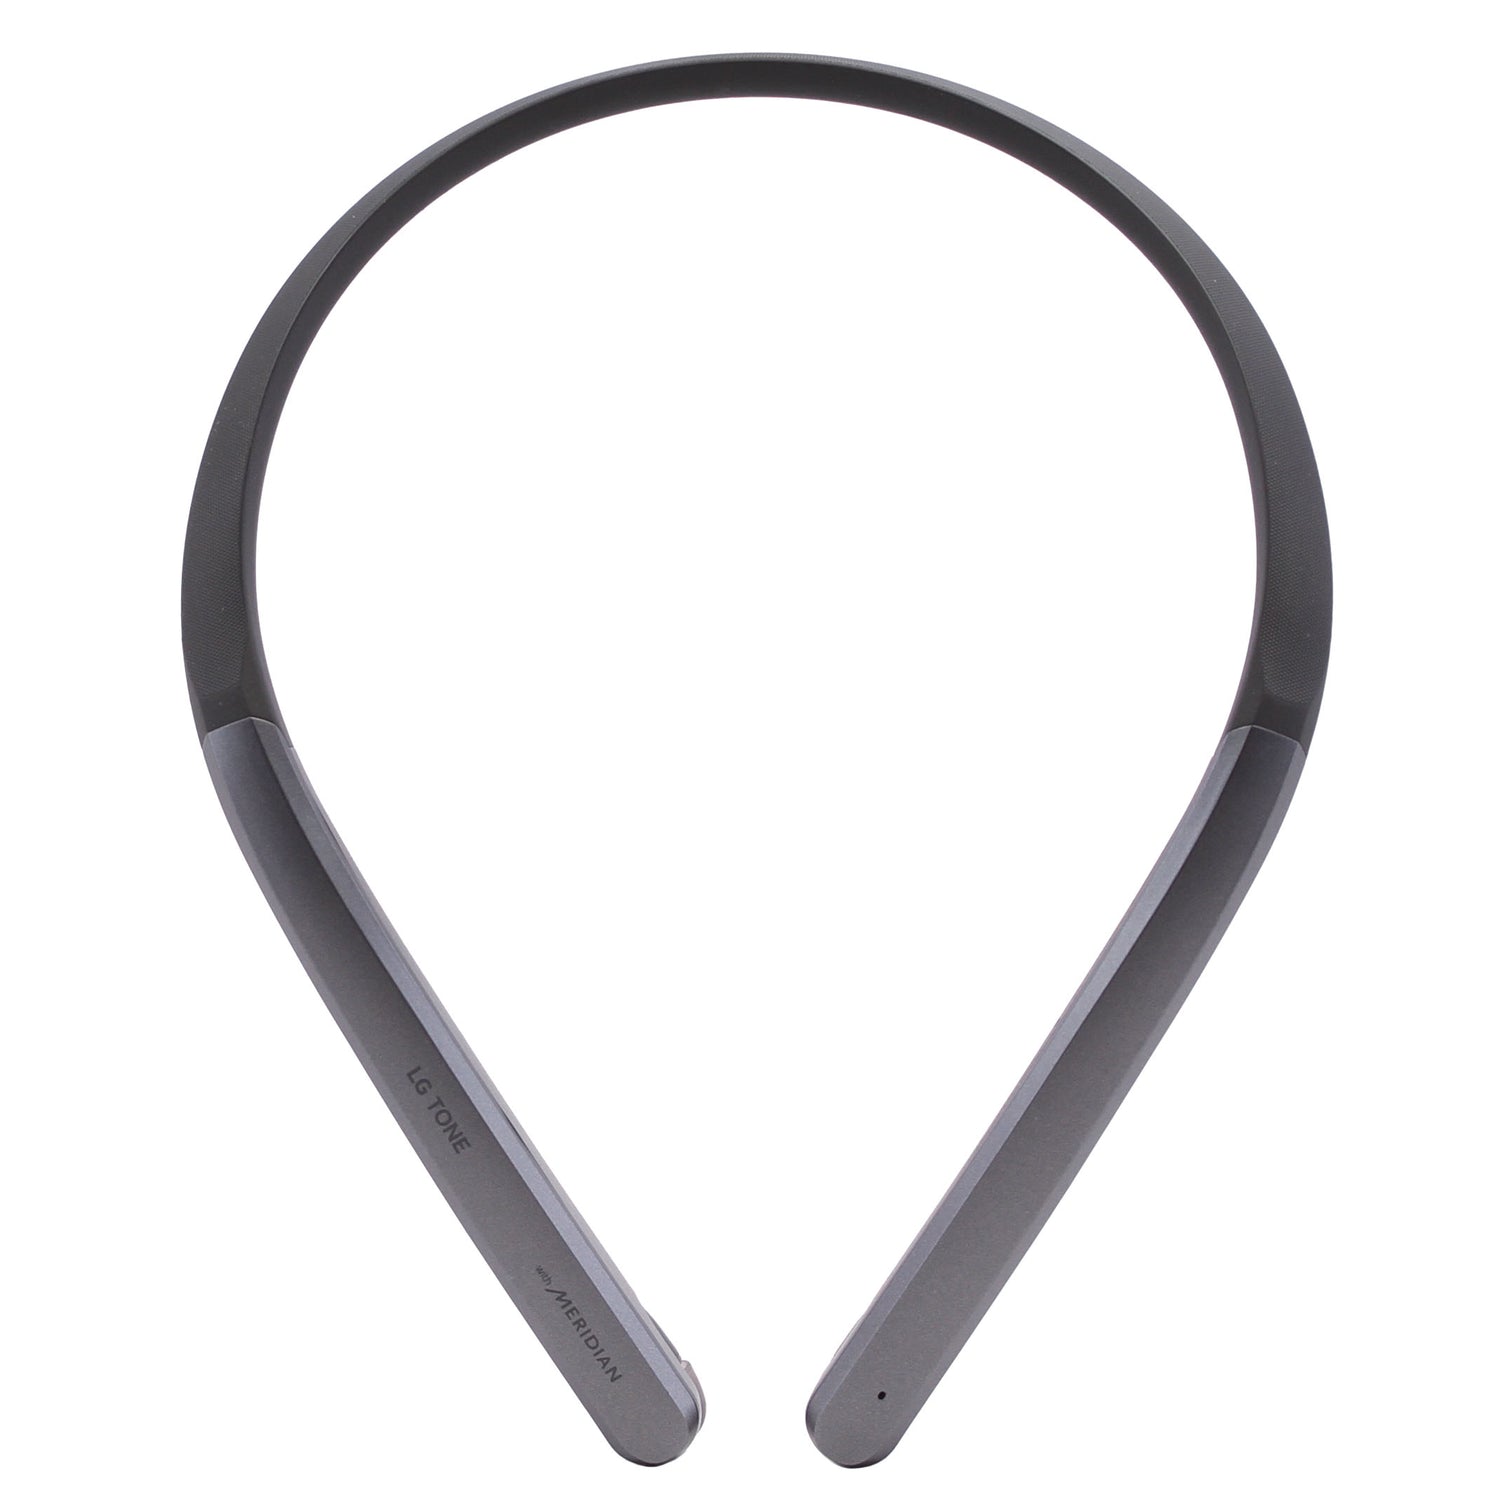 LG TONE Flex HBS-XL7 Bluetooth Wireless Stereo Headset - Black (Certified Refurbished)